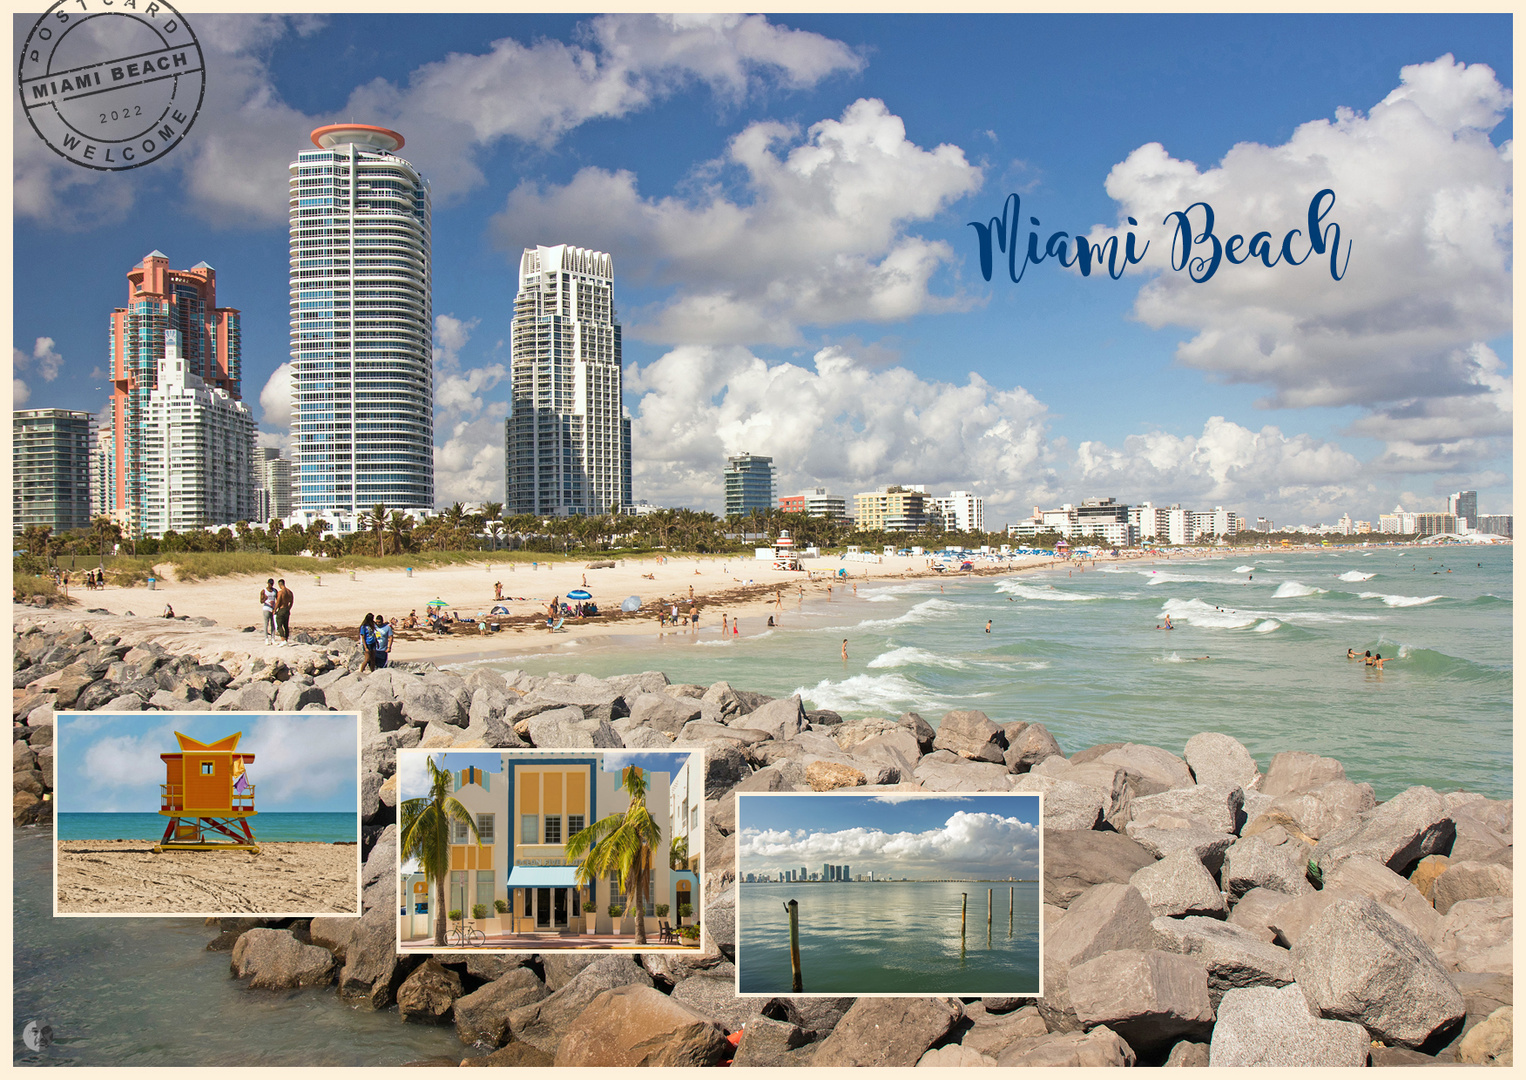 Send me a postcard from Miami Beach